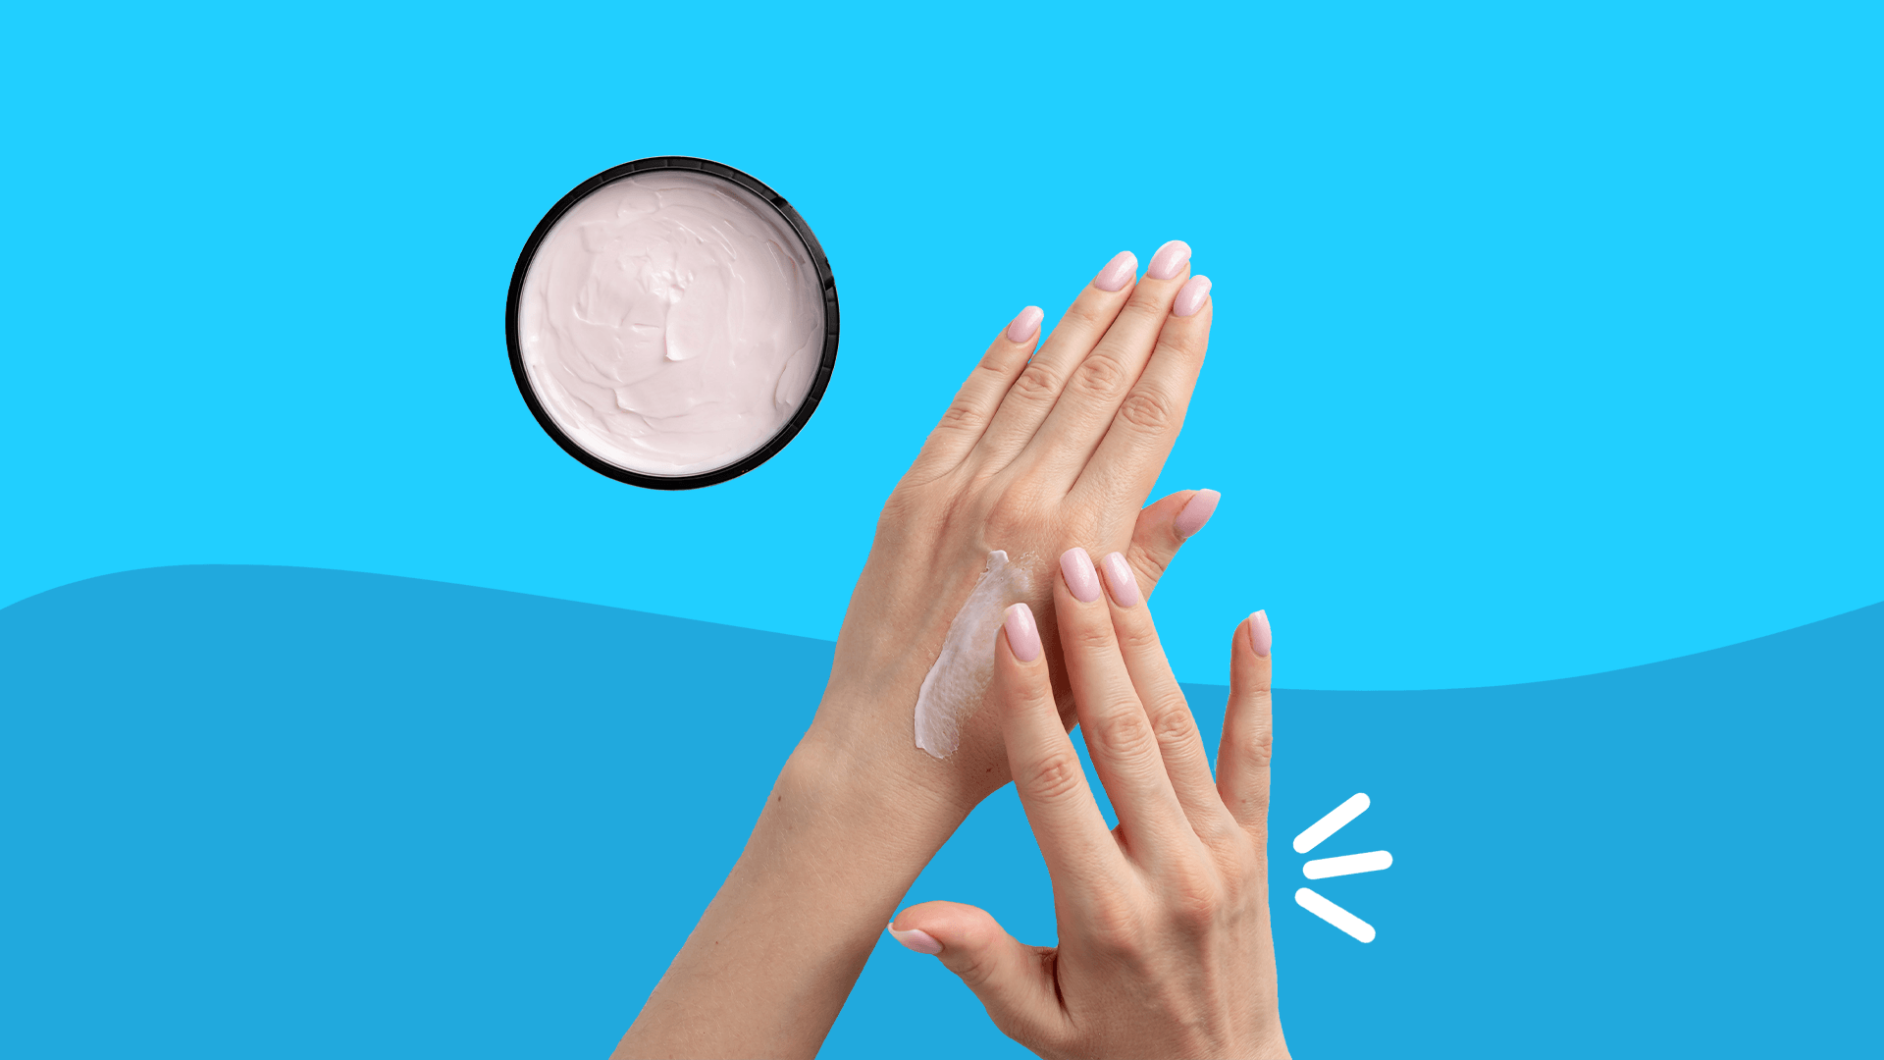 Hands with cream represent contact dermatitis treatment